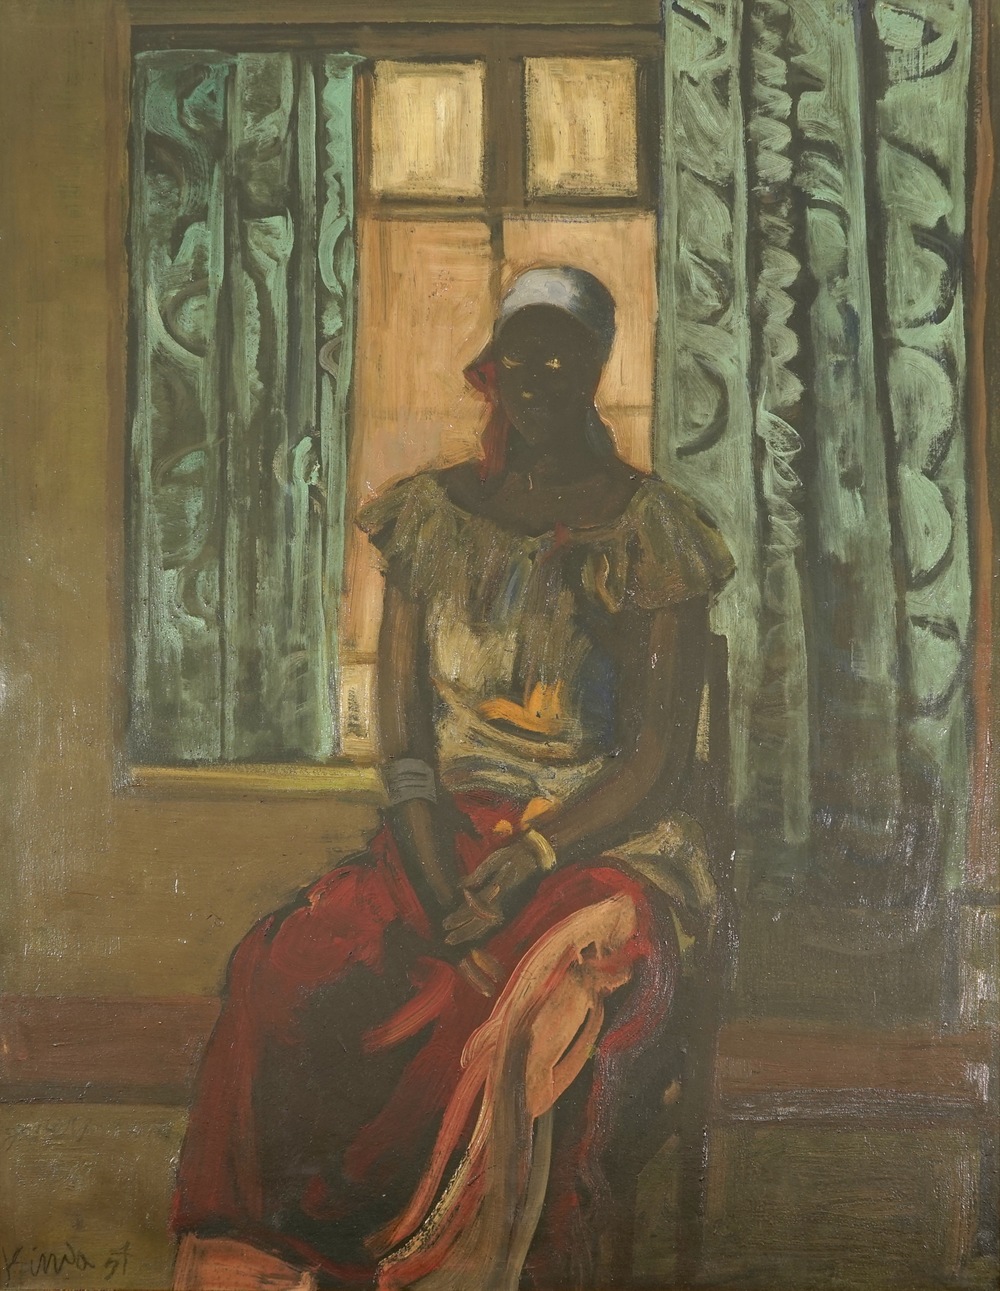 Jespers, Floris (Belgium, 1889-1965), Portrait of a Congolese, oil on panel, dated 1957